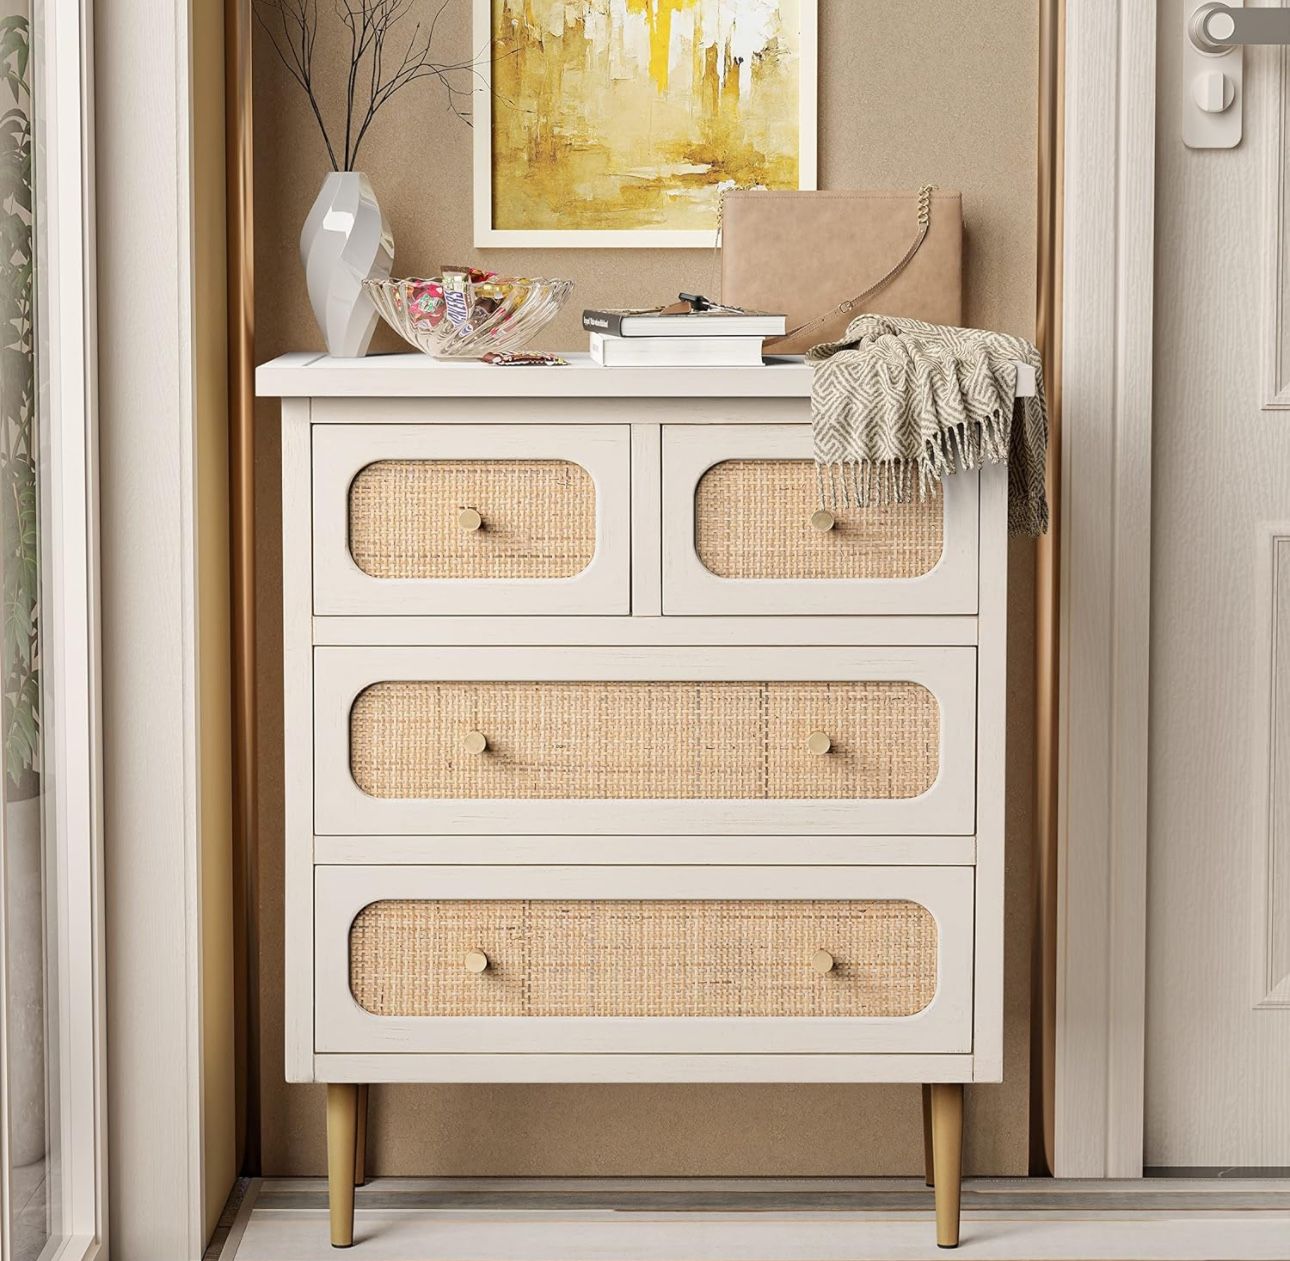 Wicker Rattan Chest of Drawers, 4-Drawer Dresser, White Finish Wooden Storage Cabinet